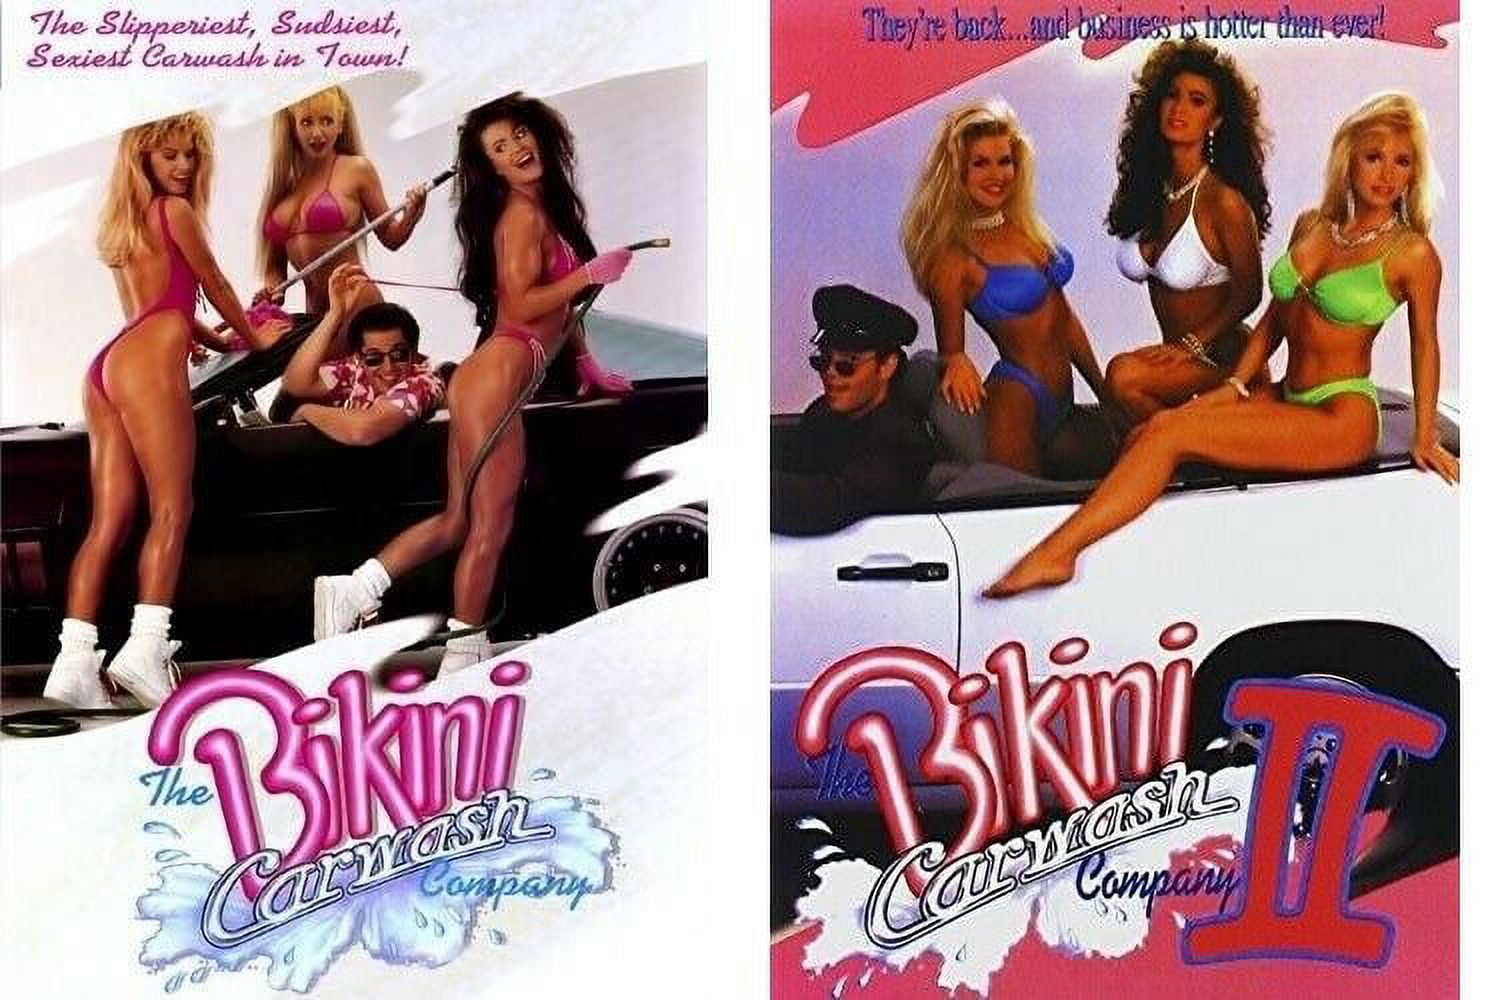 bernie kincaid recommends bikini carwash company movie pic